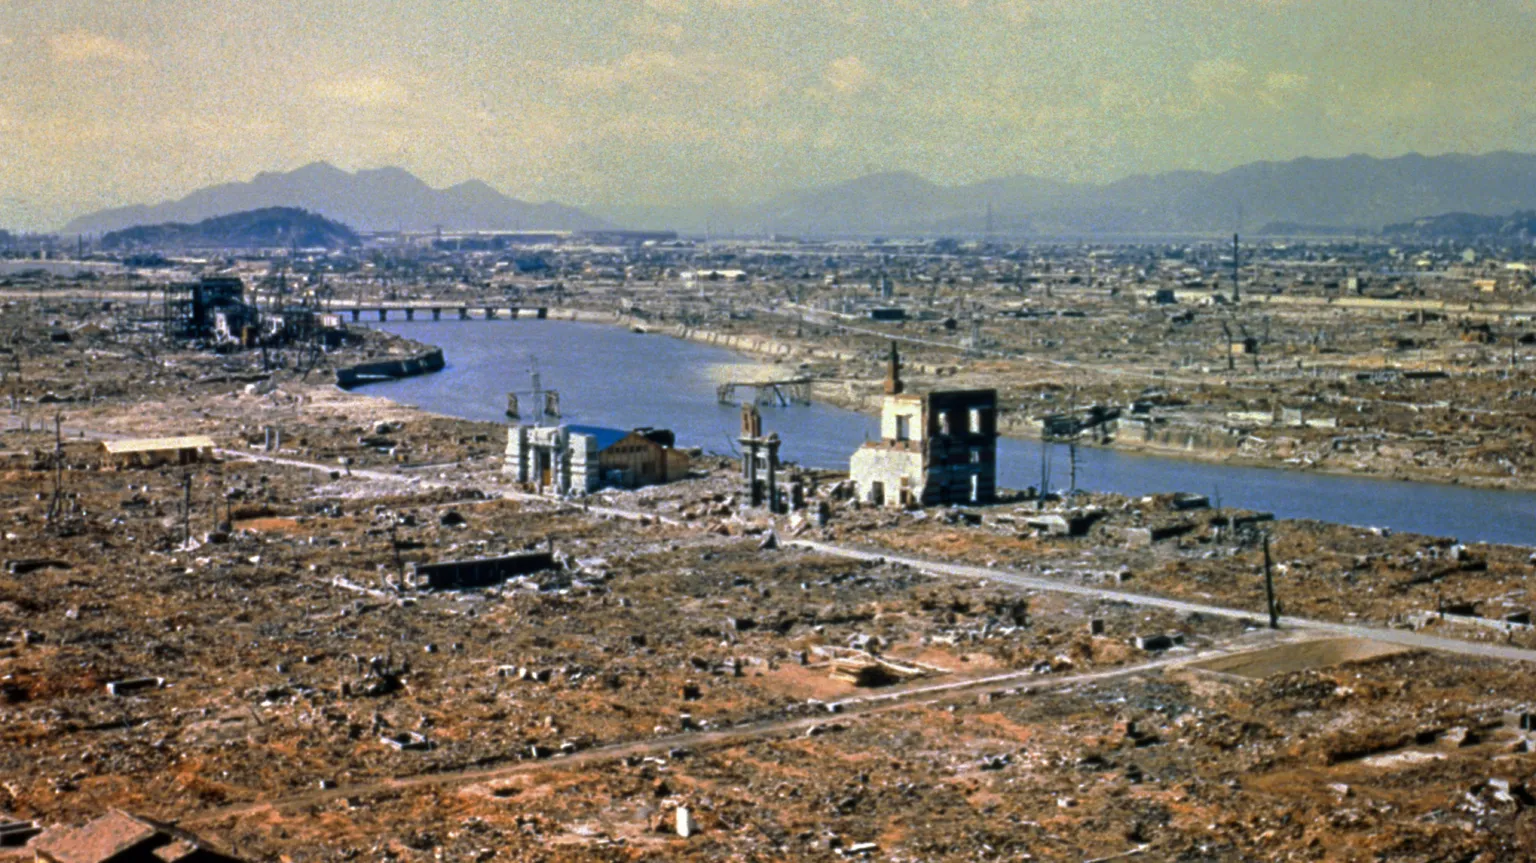 Hiroshima after atomic bomb attack